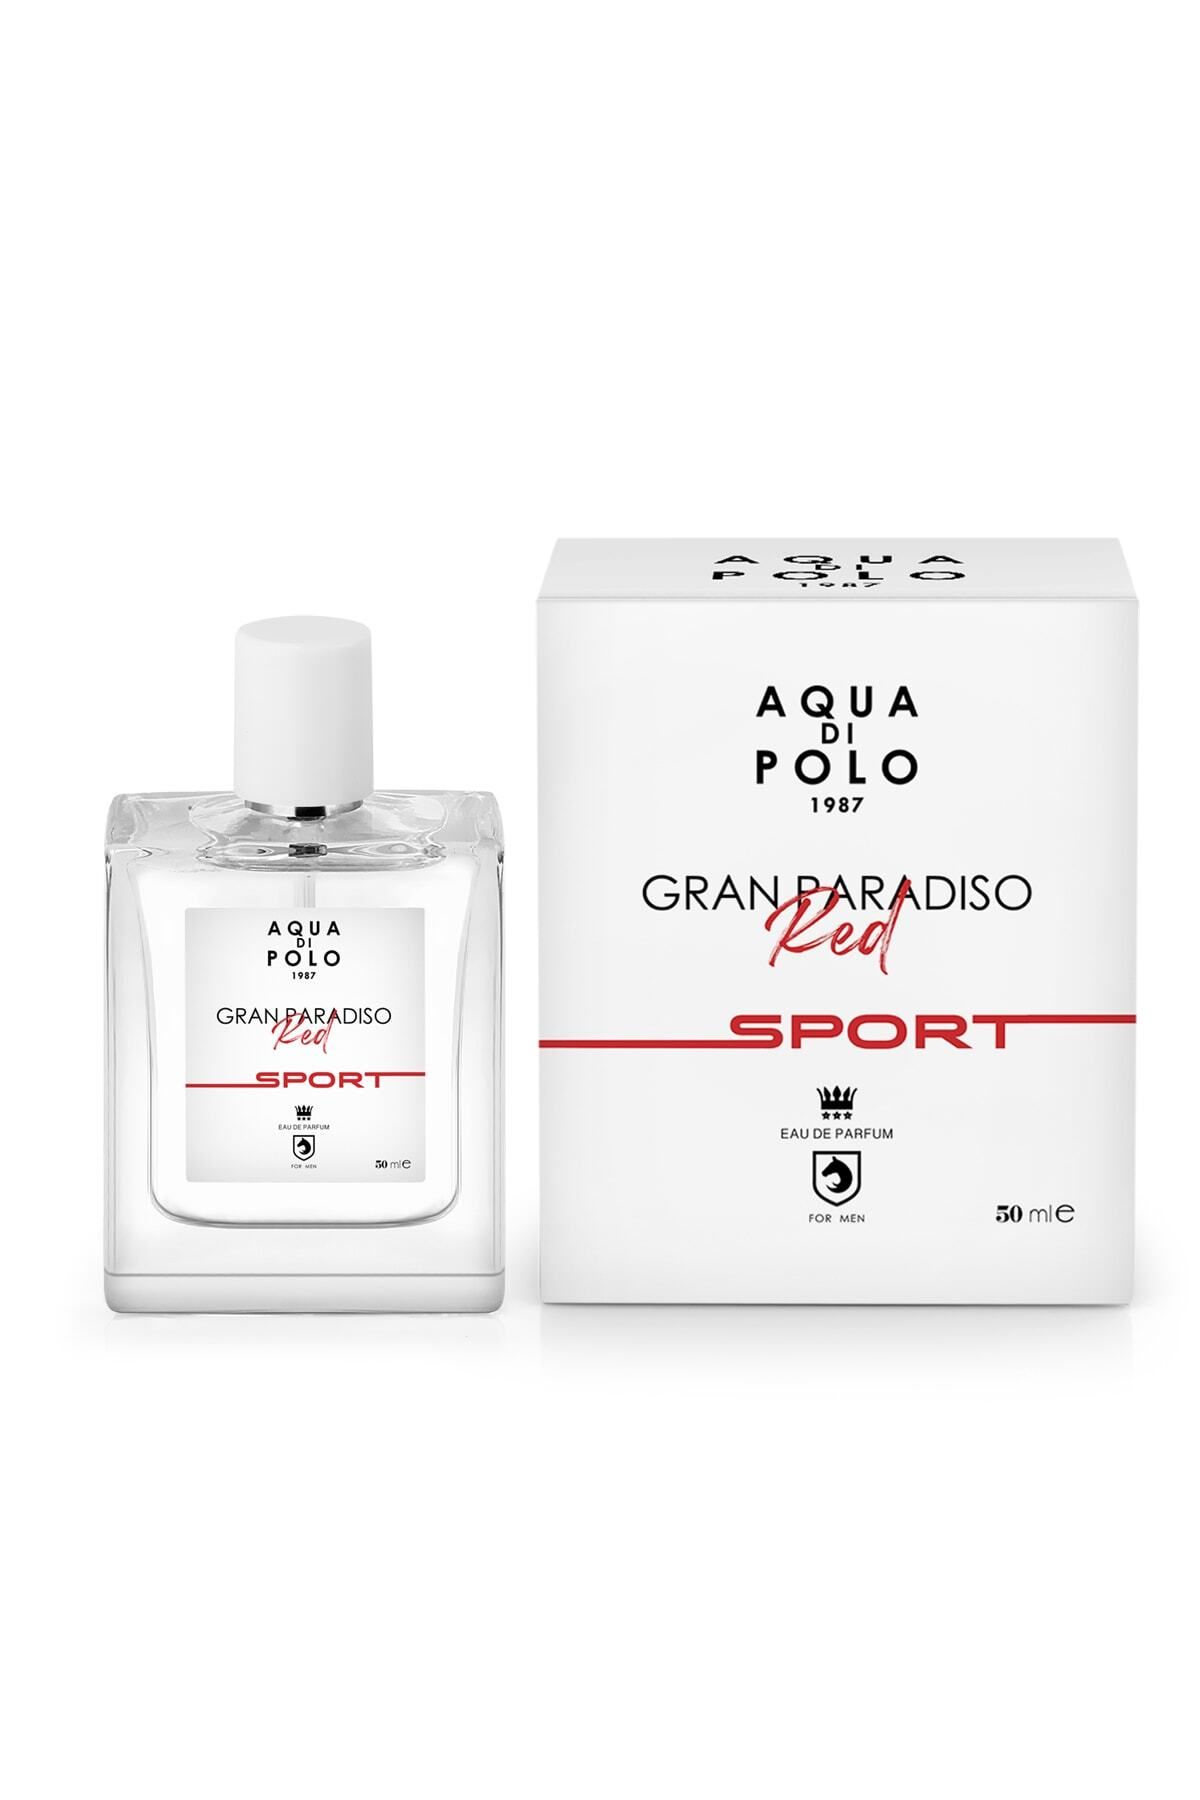 Aqua Di Polo 1987 Gran Paradiso Red Sport 50 Ml Erkek Edp Apcn000510